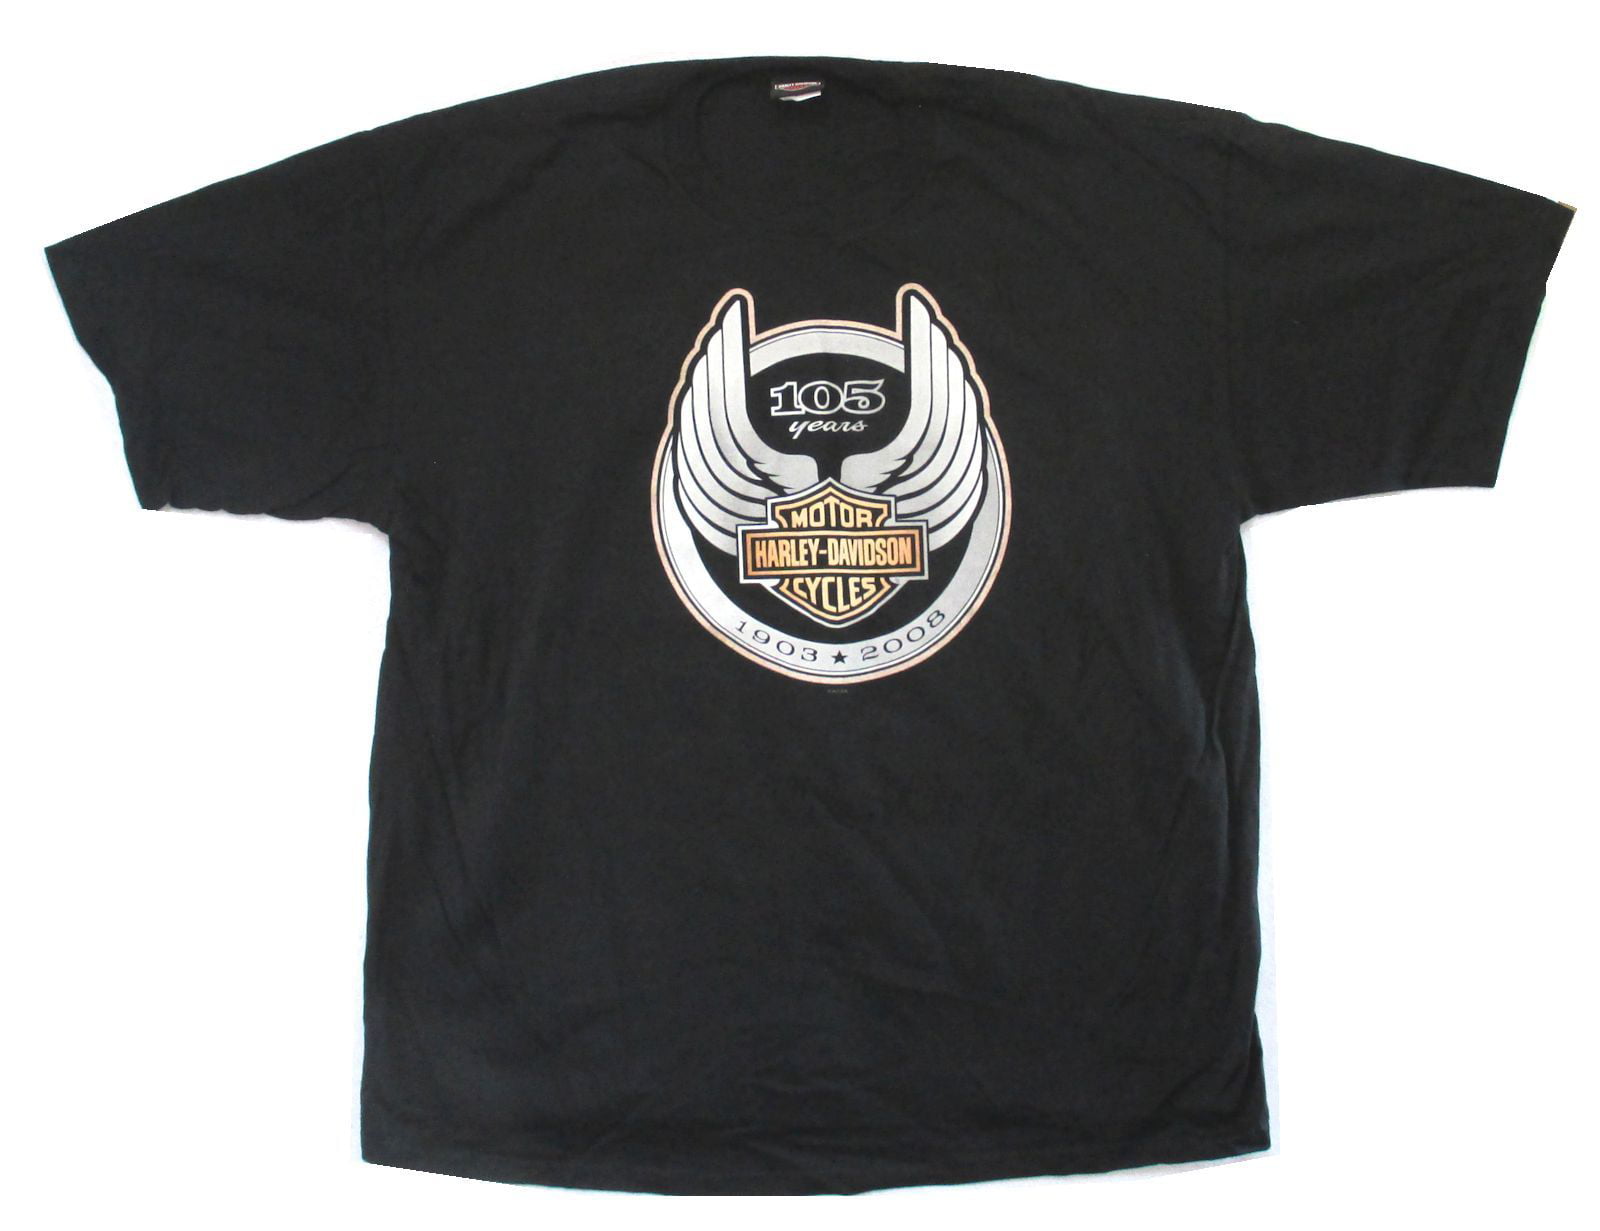 Harley Davidson 105Th Anniversary Shirt Nwt Men's medium 